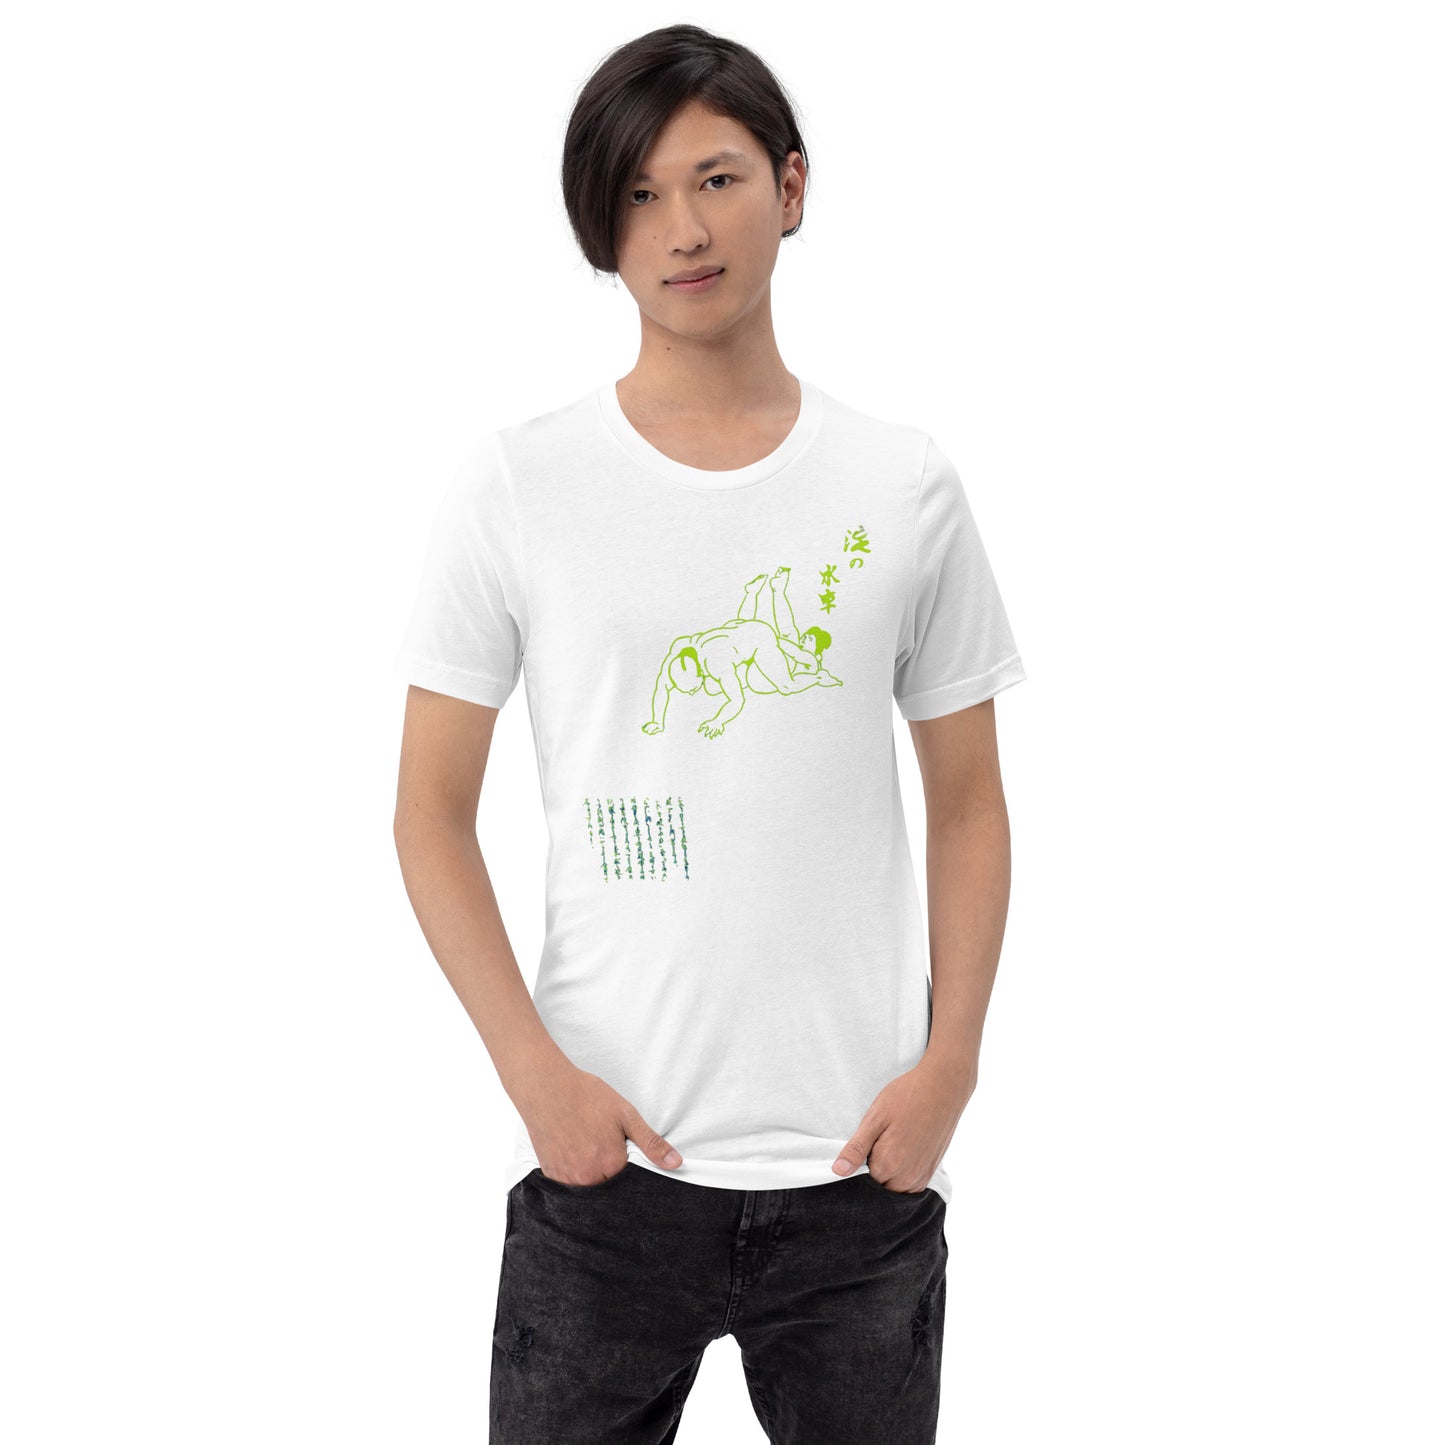 Unisex t-shirt "56 YODO NO SUISHA" White